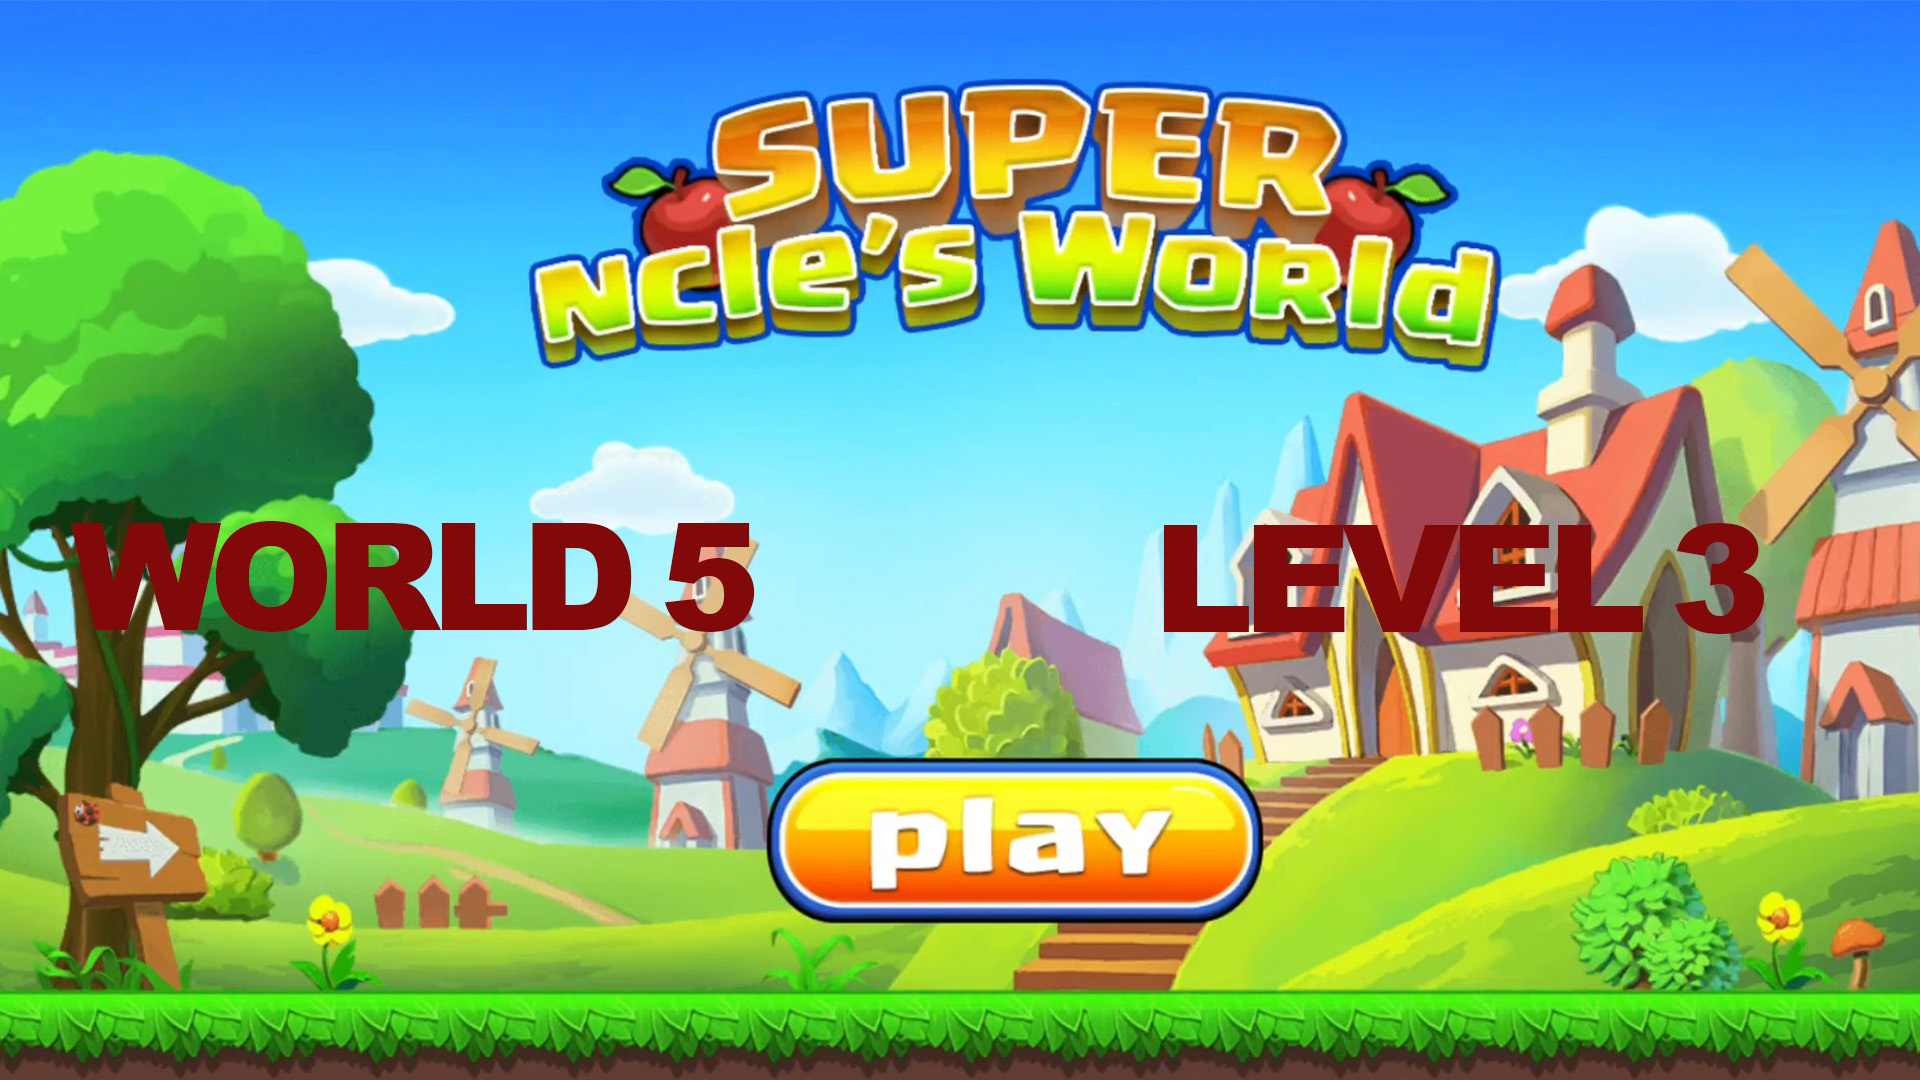 Super ncle's  World 5. Level 3.